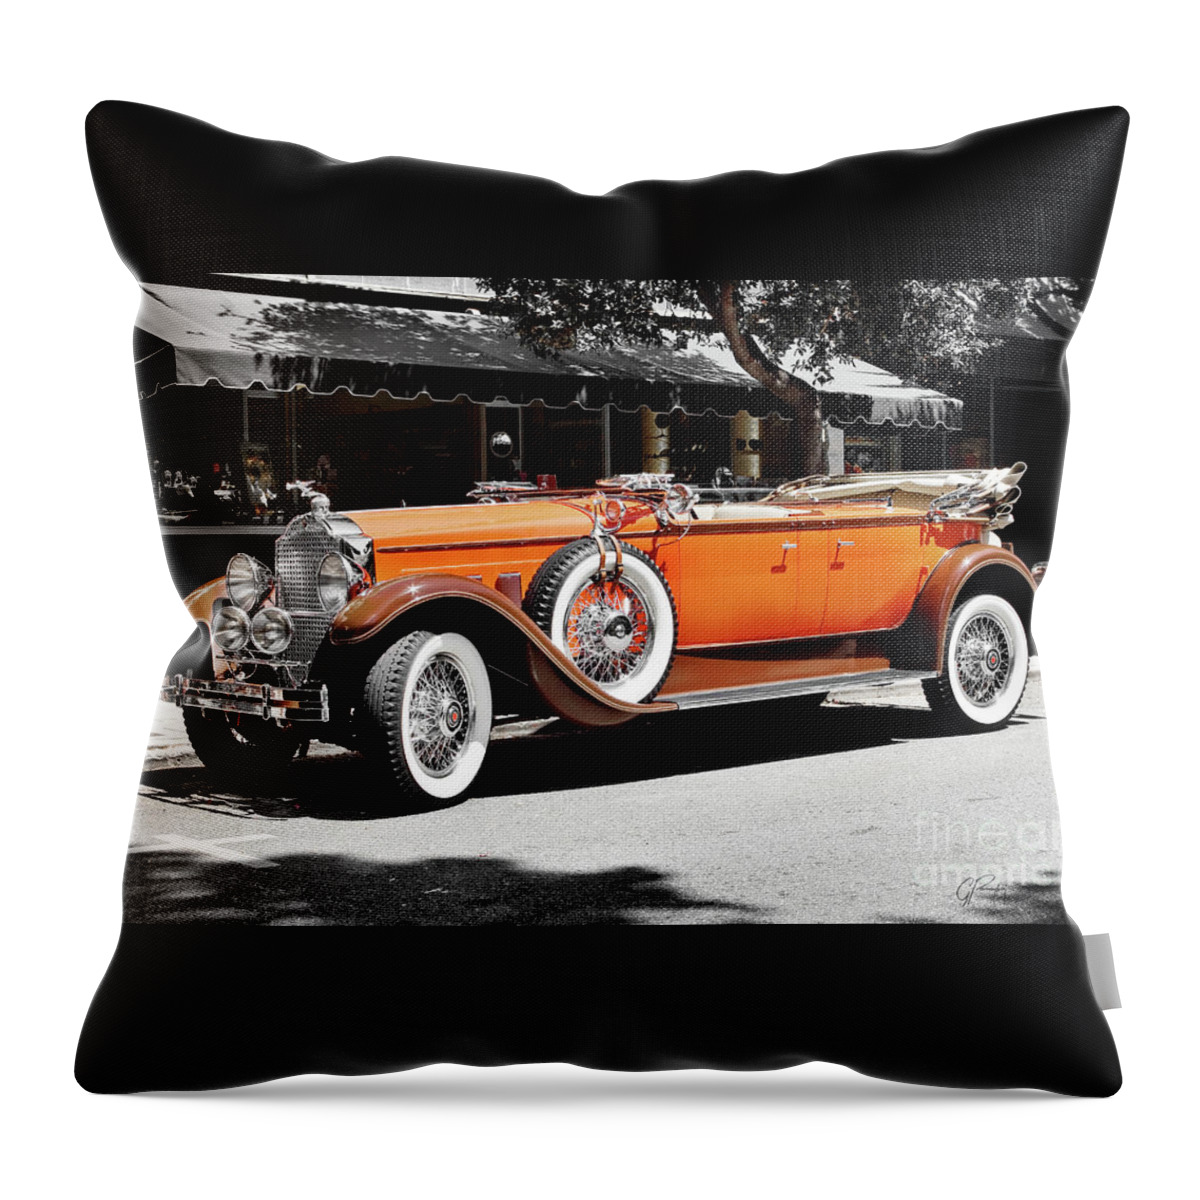 Packard Elegance Throw Pillow featuring the photograph Packard Elegance by Gabriele Pomykaj